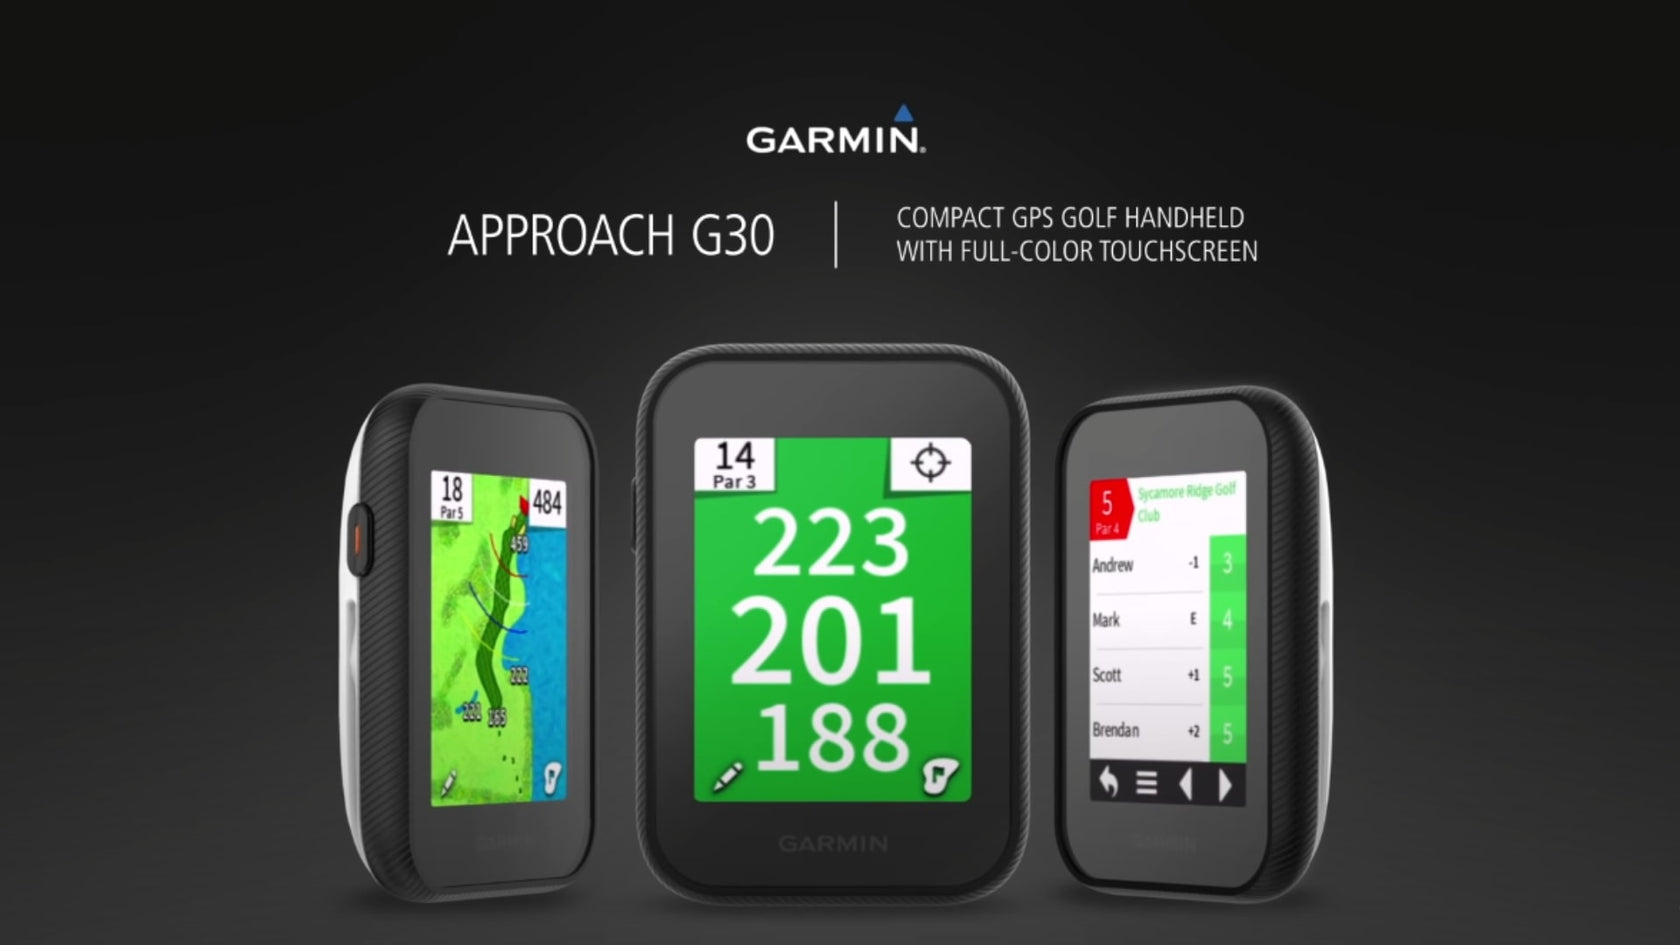 Garmin G30 video cover